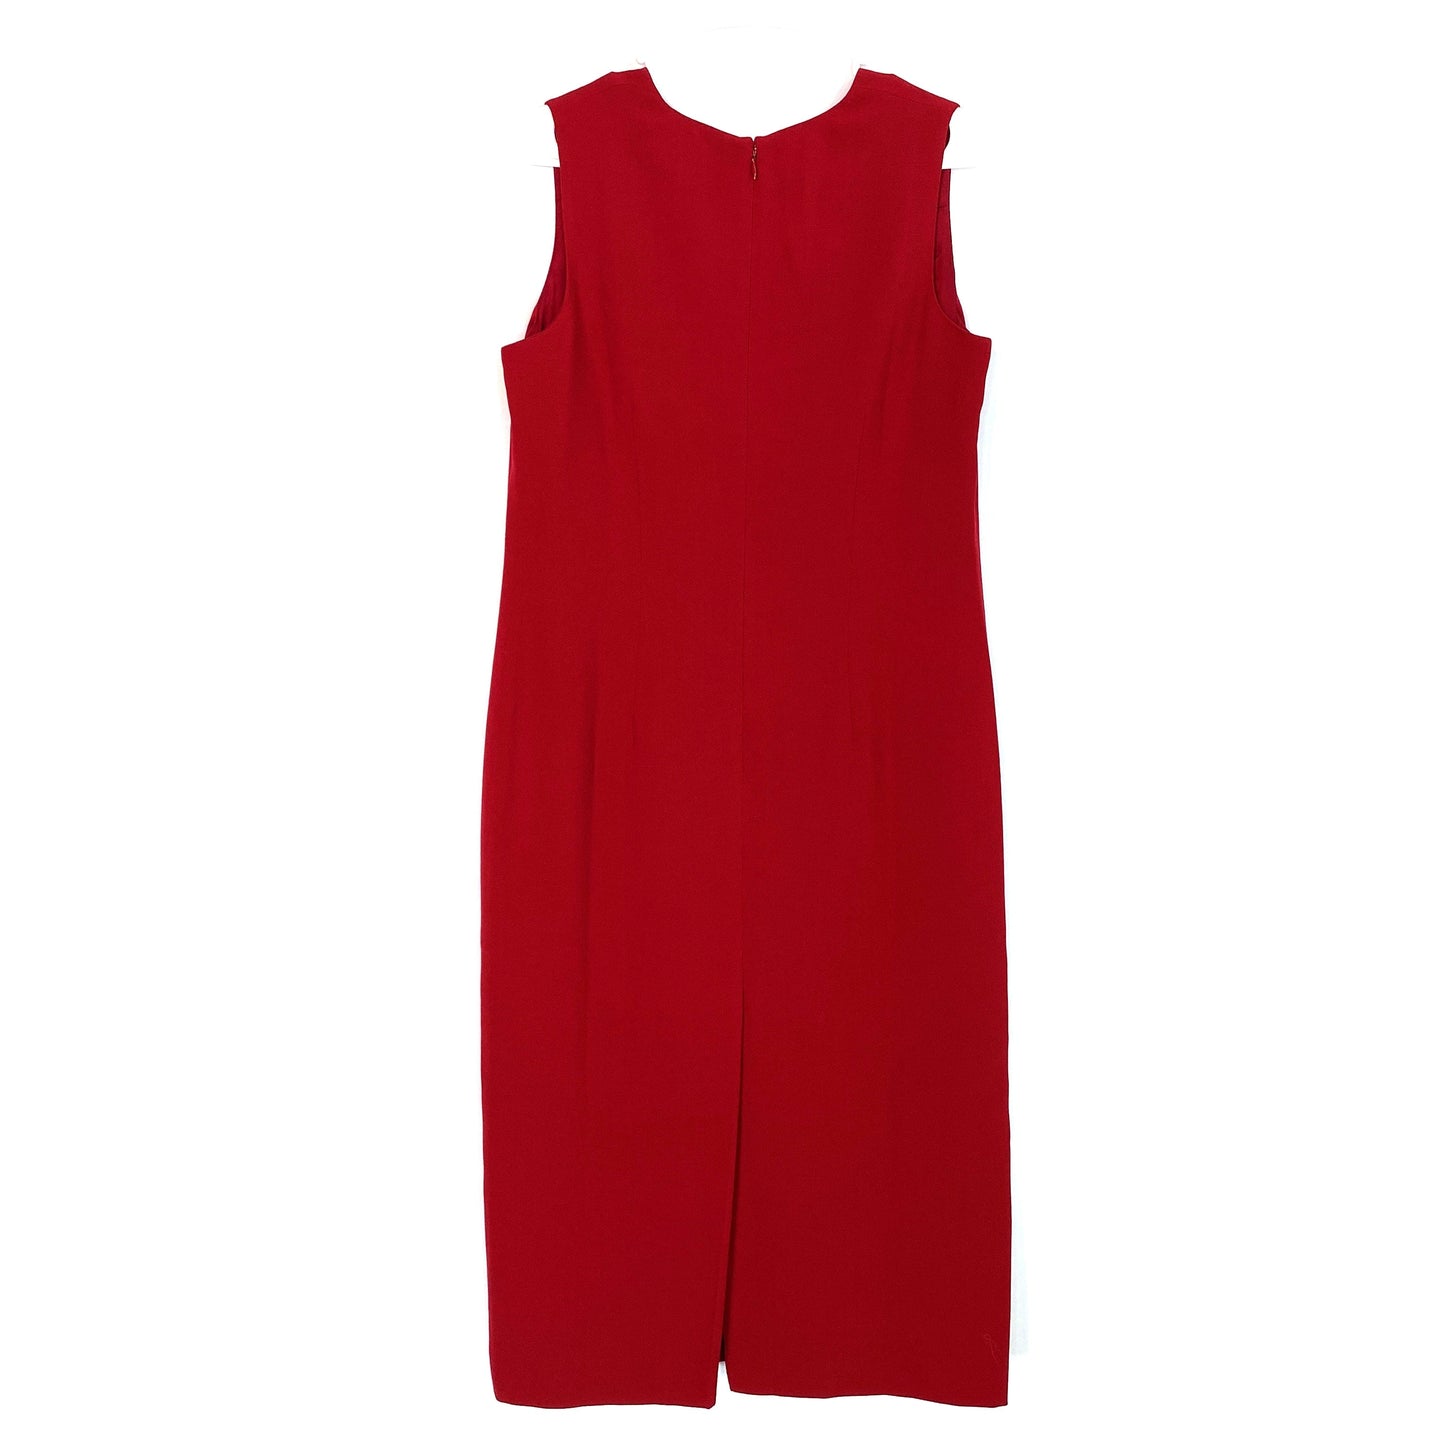 Valerie Stevens Woolmark Womens Size 8 Red Sleeveless Sheath Dress Pure Wool